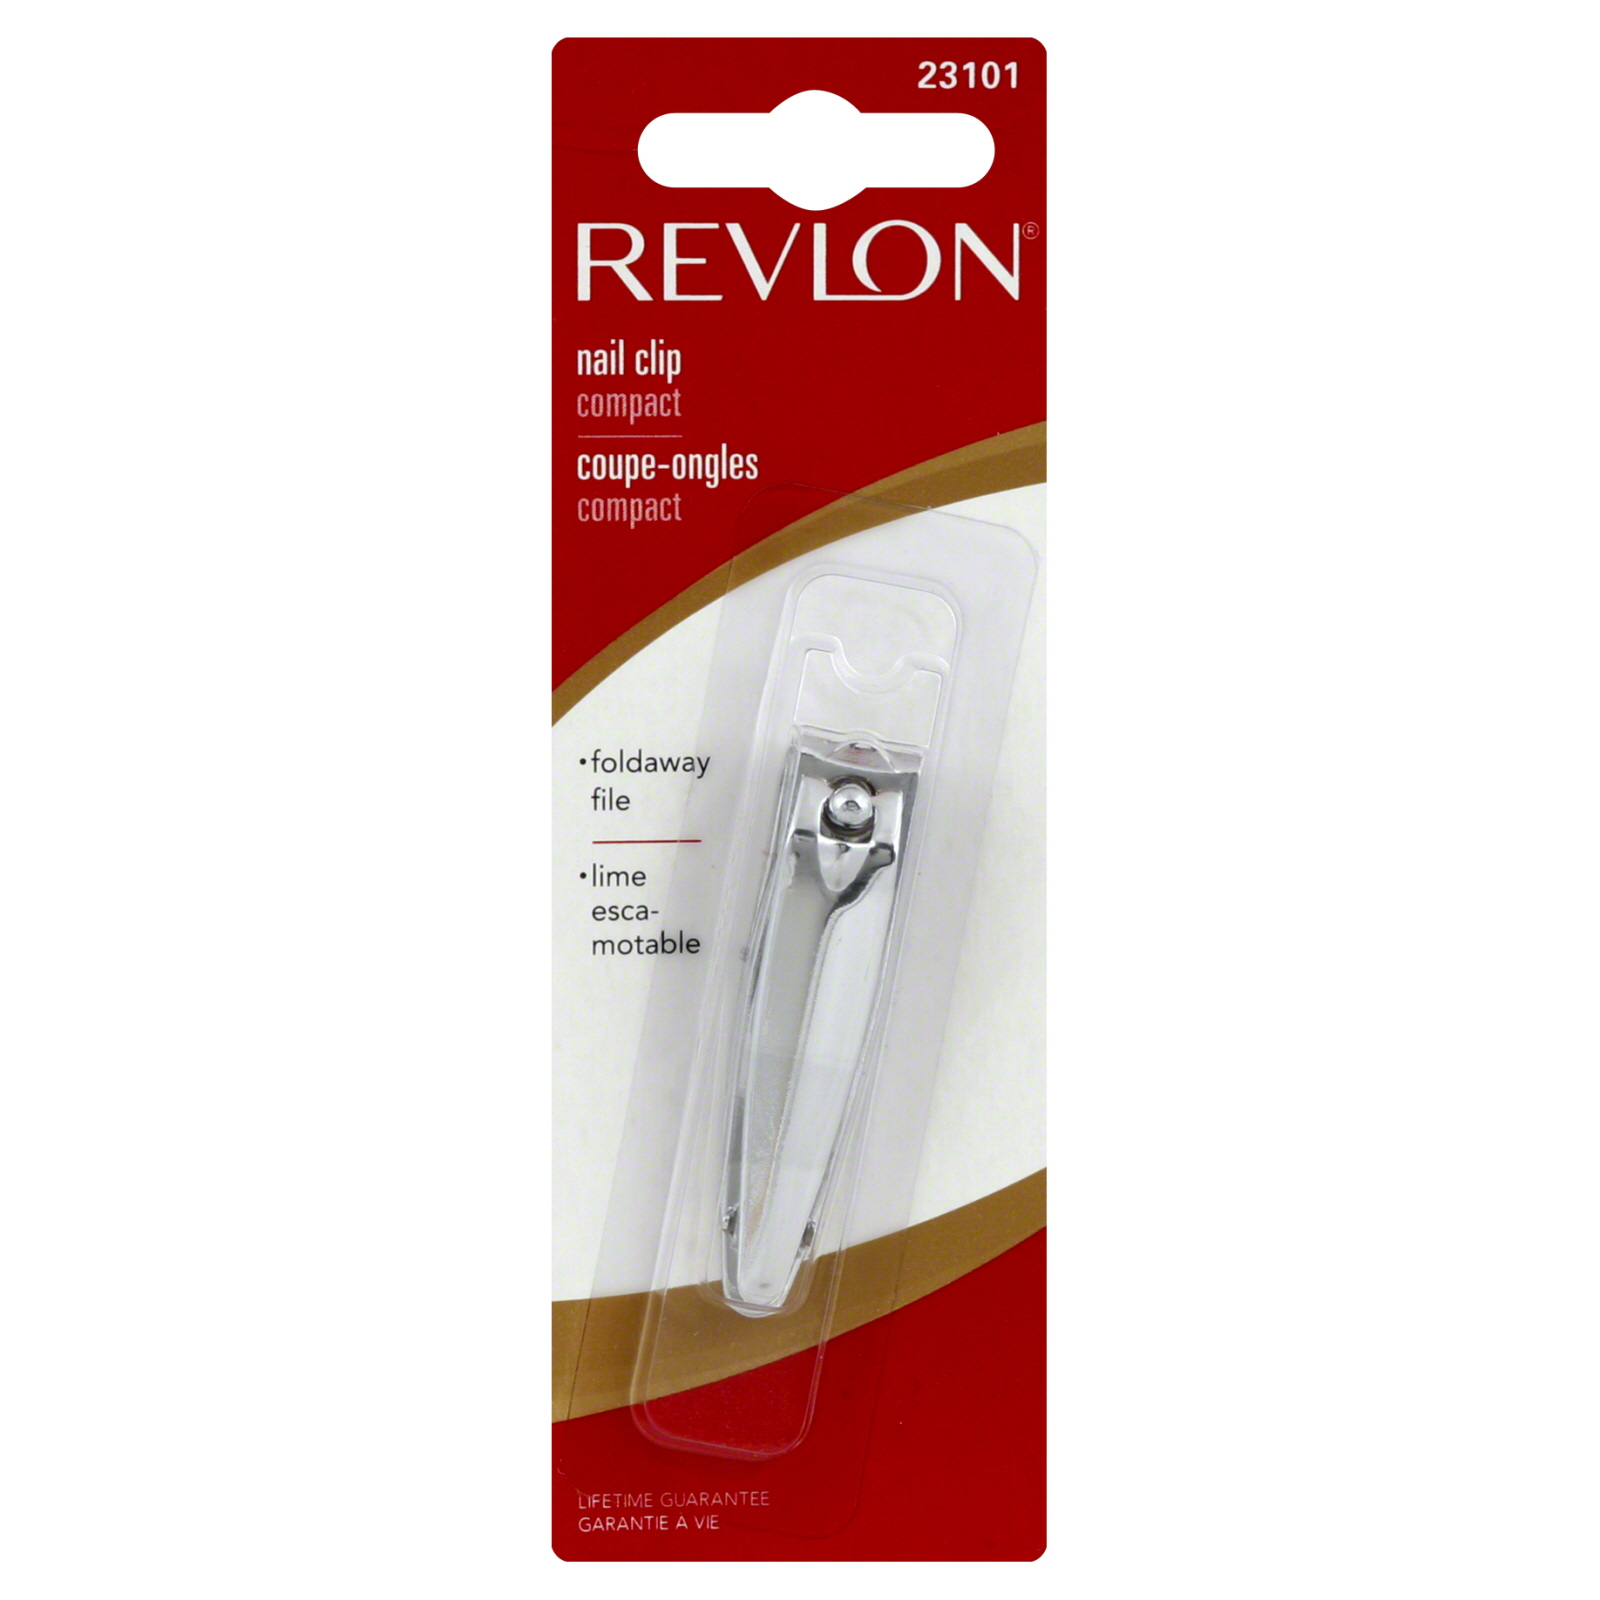 Revlon Nail Clip, Compact, 1 clipper